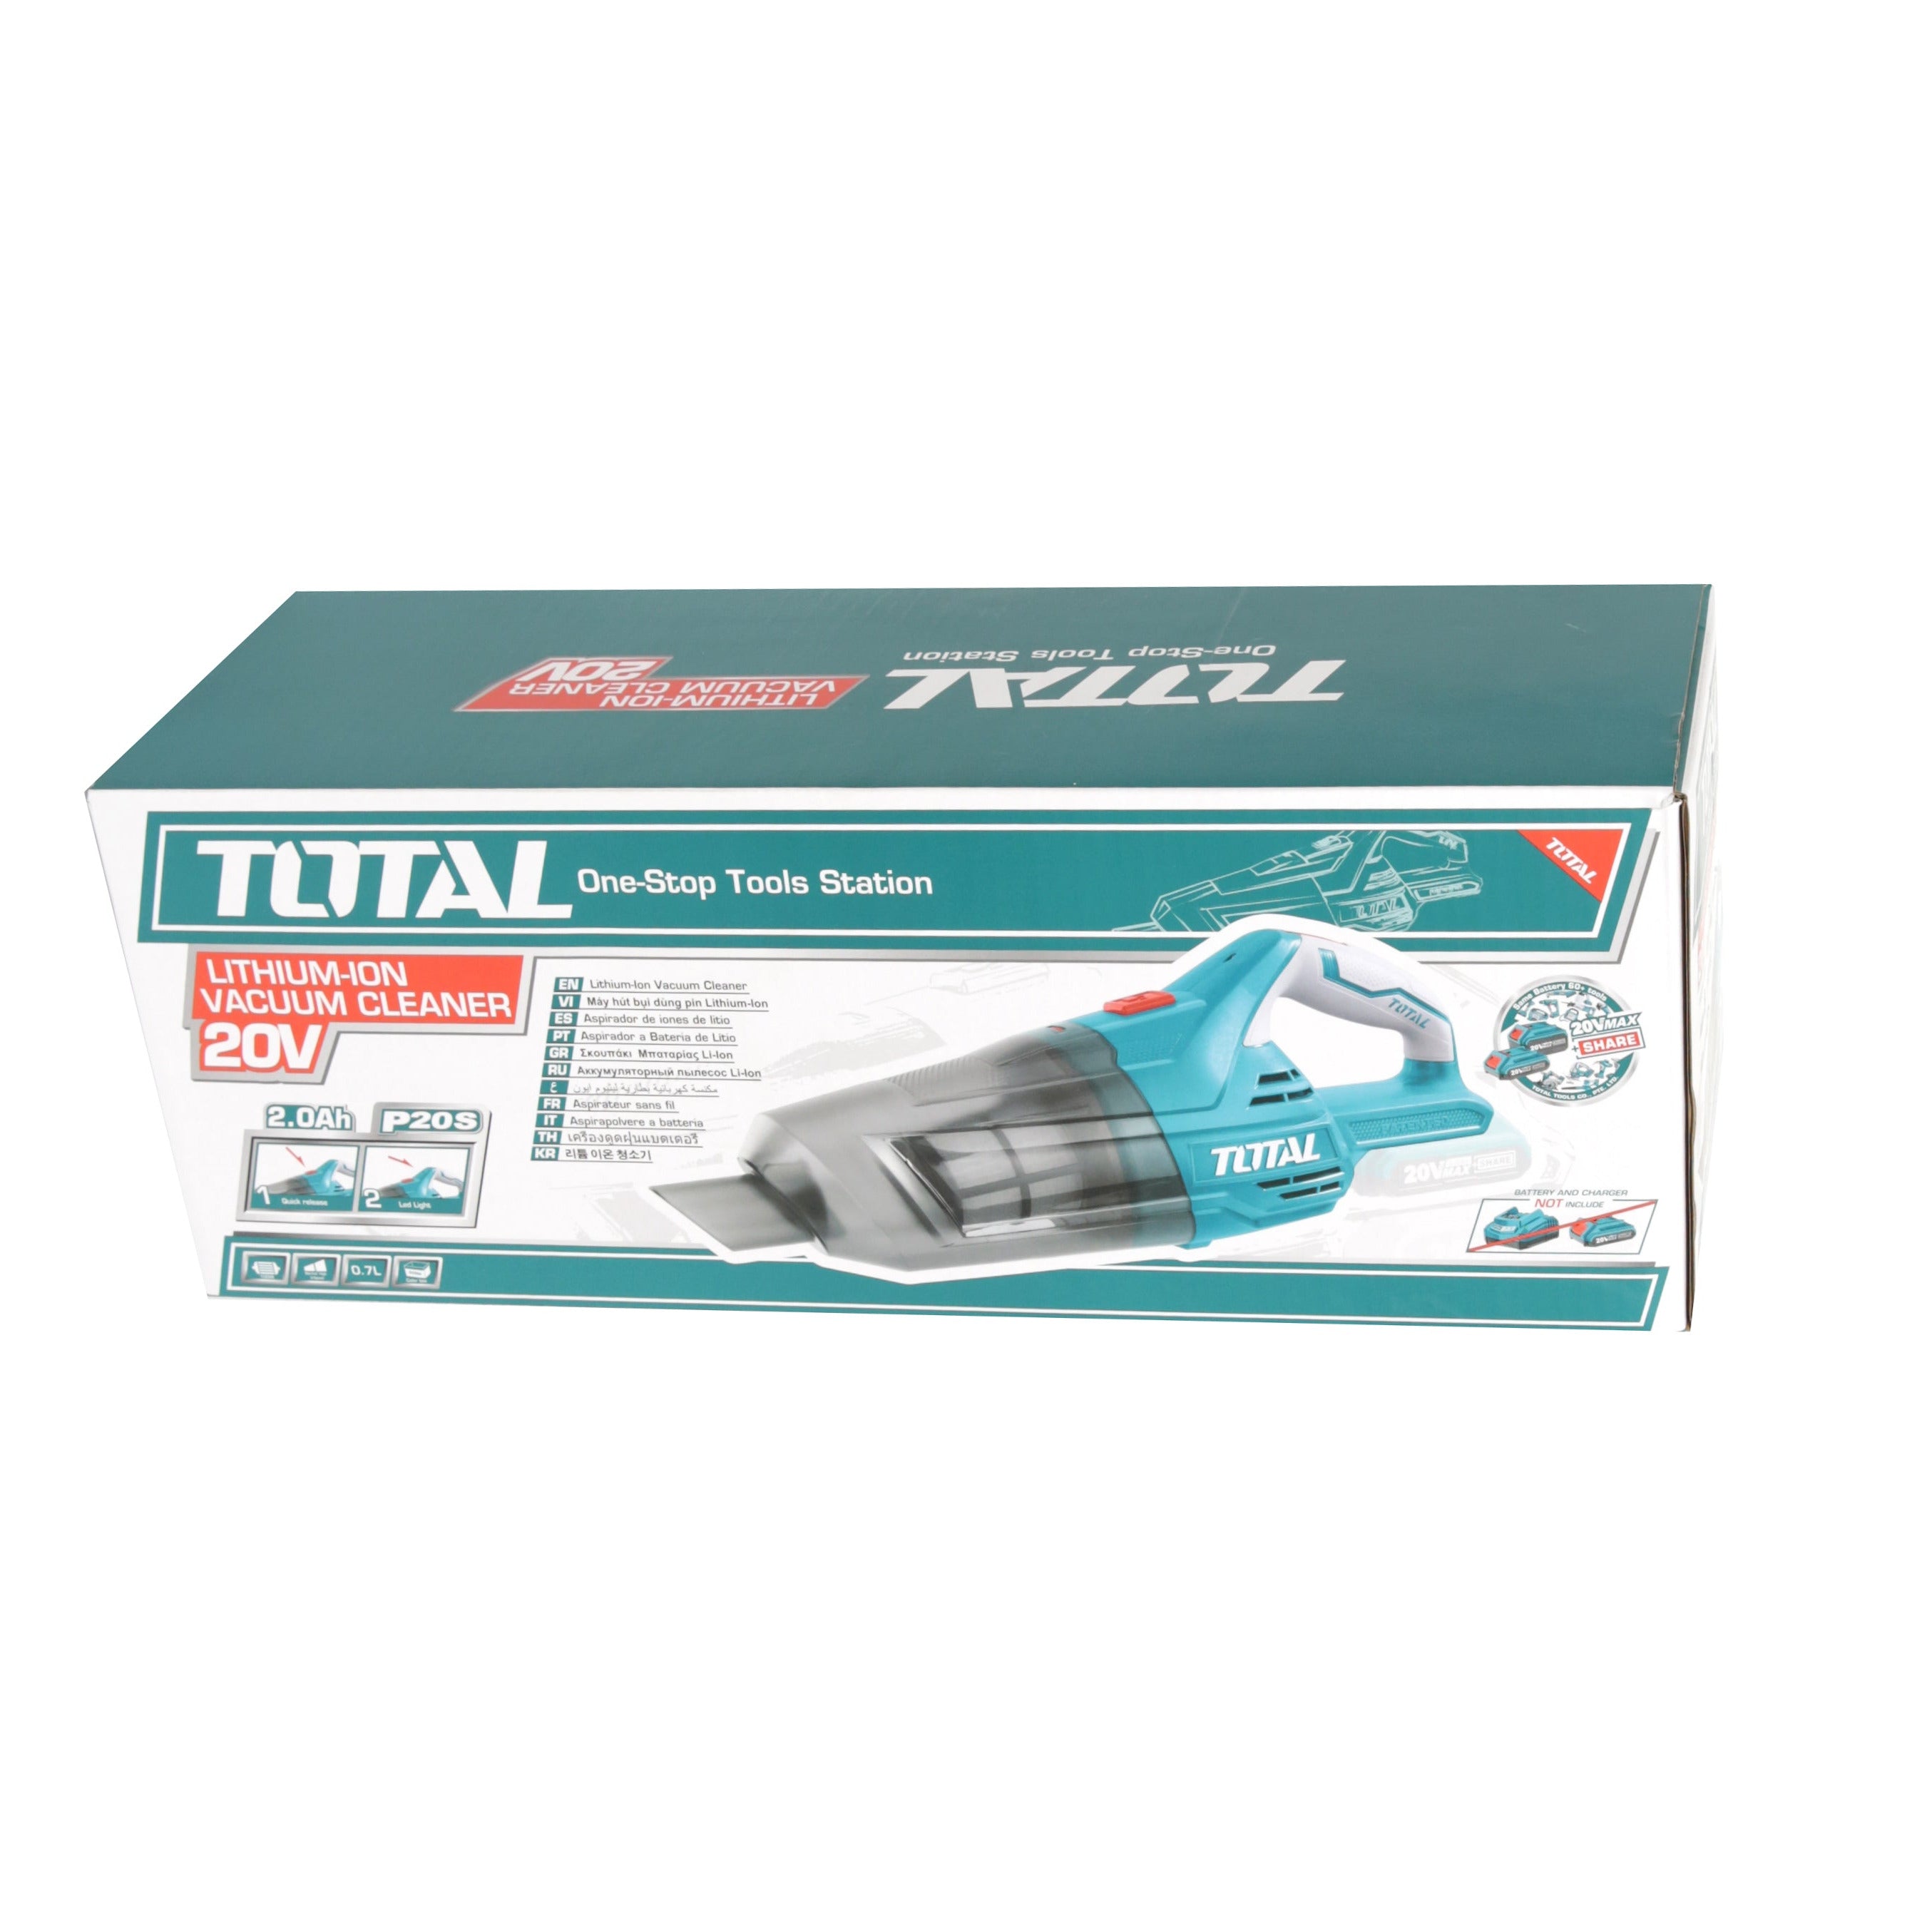 Total Li-Ion 20V Vacuum Cleaner (Battery not included) - TVLI2001